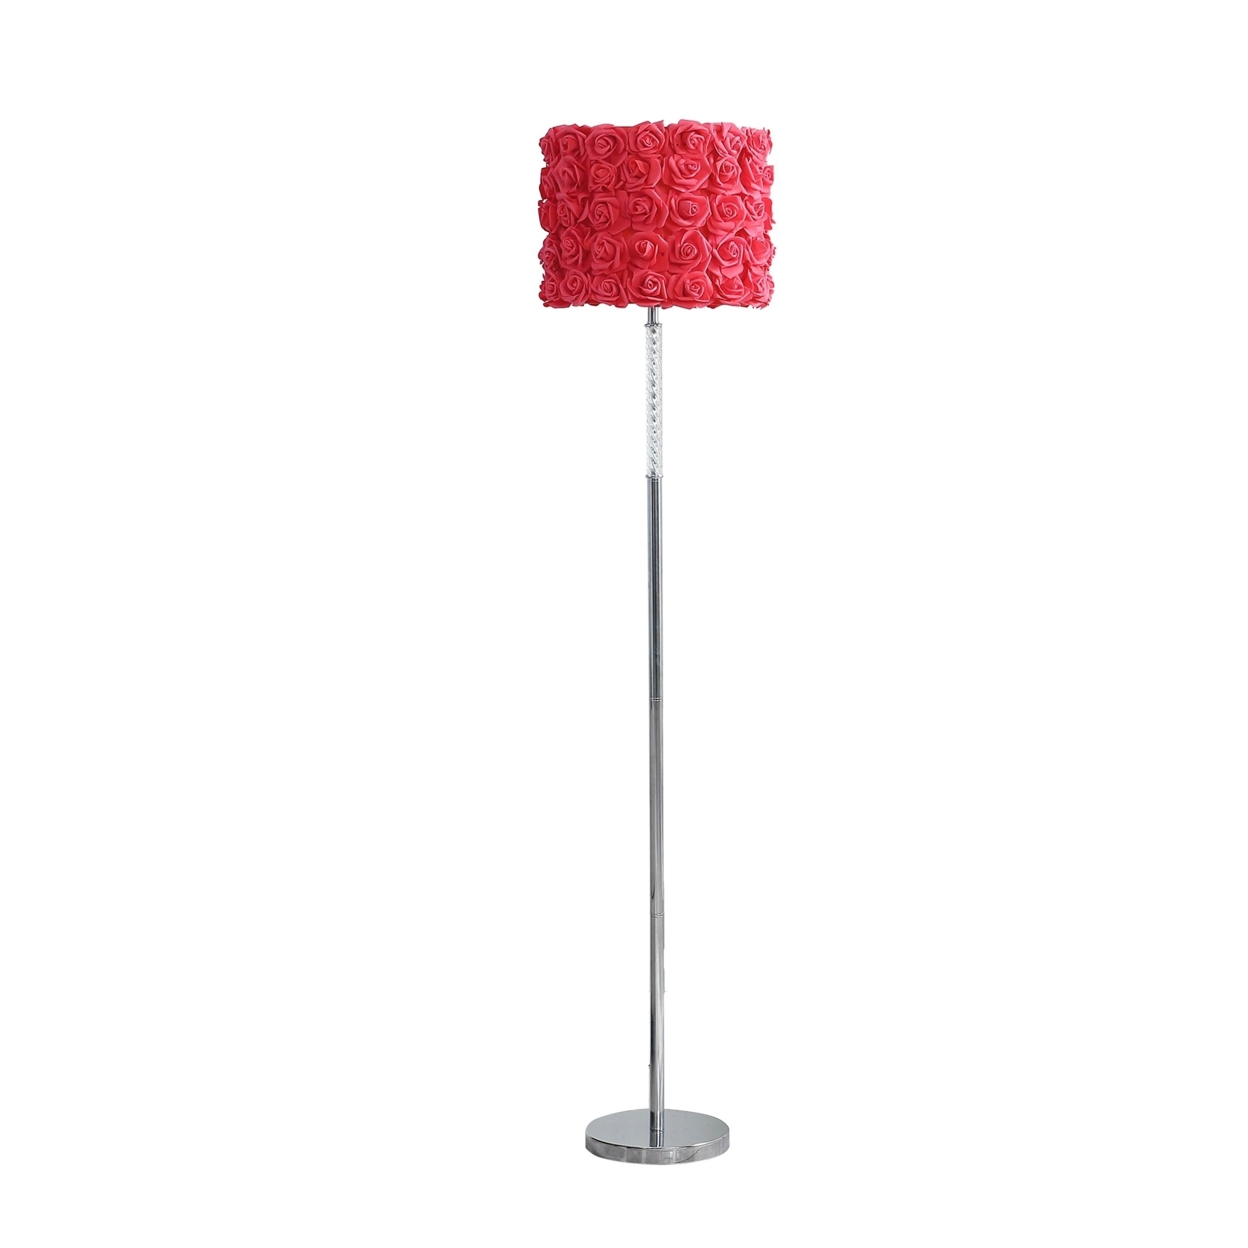 Finn 63 Inch Glamorous Floor Lamp, Rose Accent Shade, 100W, Red, Silver- Saltoro Sherpi